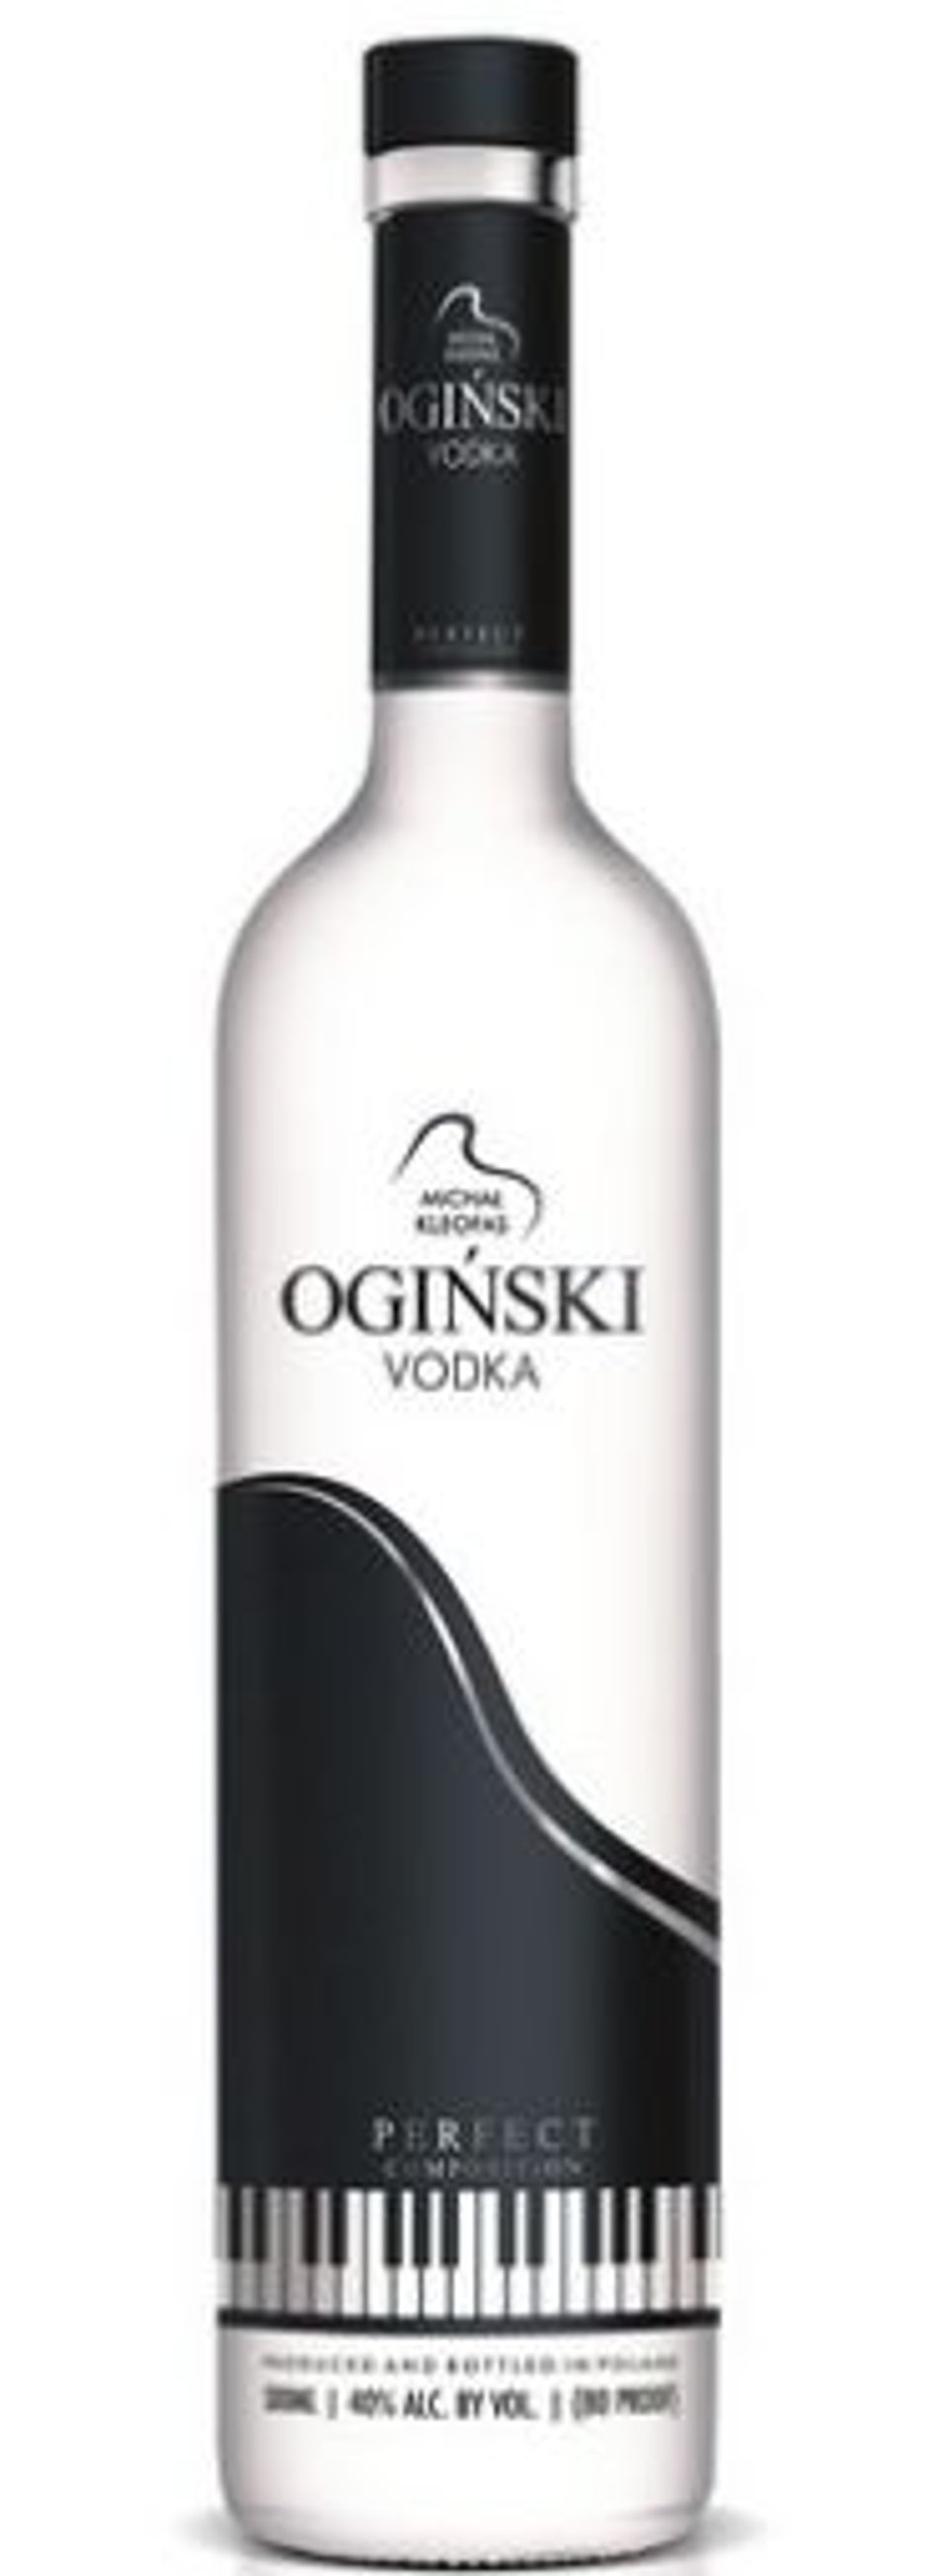 Oginski vodka